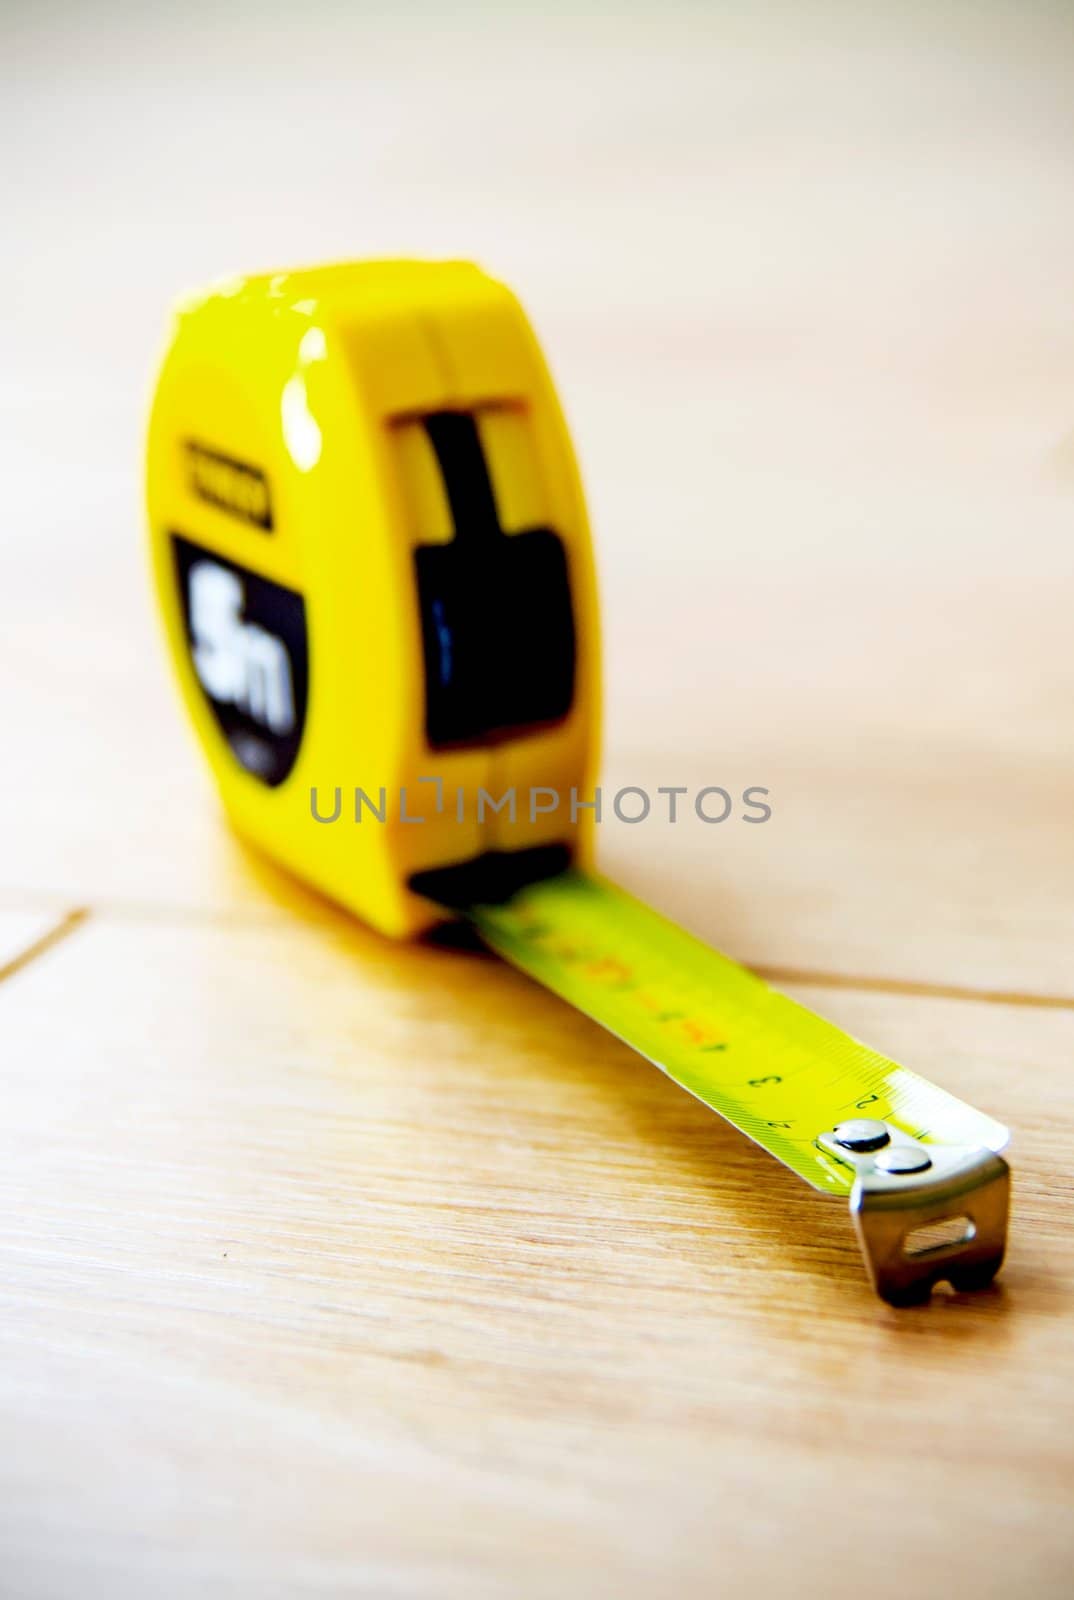 Measure. Tool on wooden floor by simpson33